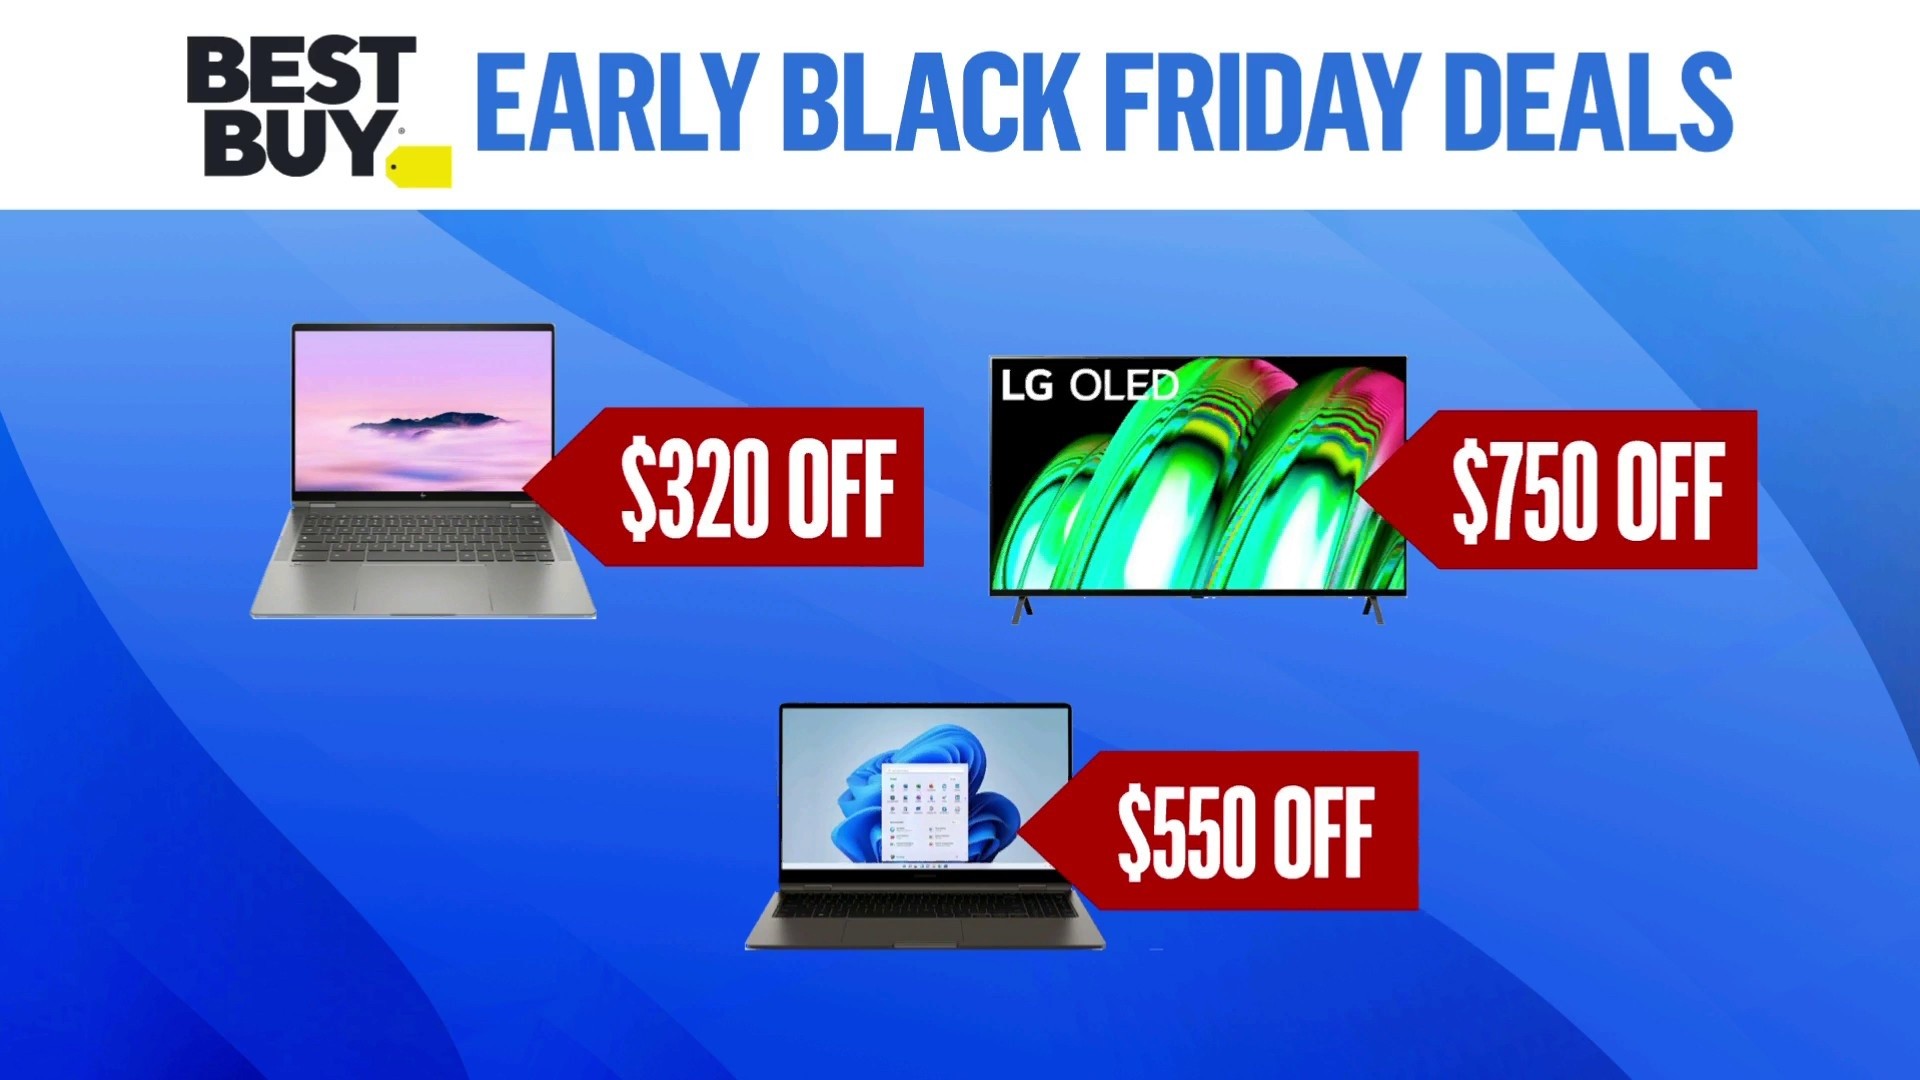 Best Buy reveals its 2023 Black Friday deals will start on Oct. 30